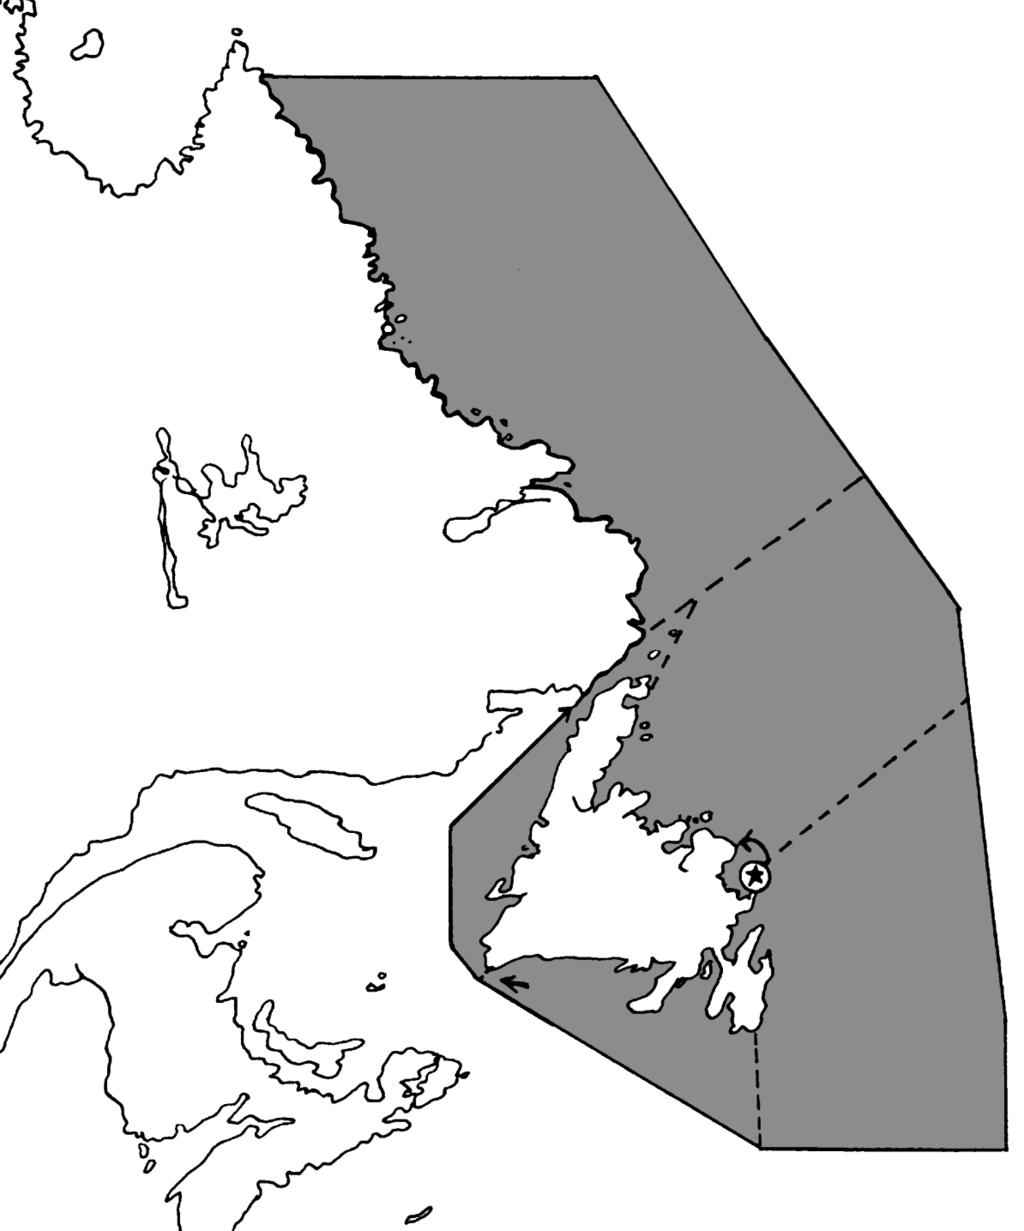 SAR Seamanship Reference Manual 1-9 Québec City Figure 1.2: MRSC Quebec operational boundaries 60 00.0'N 64 10.0'W 60 00.0'N 56 40.0'W Figure 1.3: MRSC St.